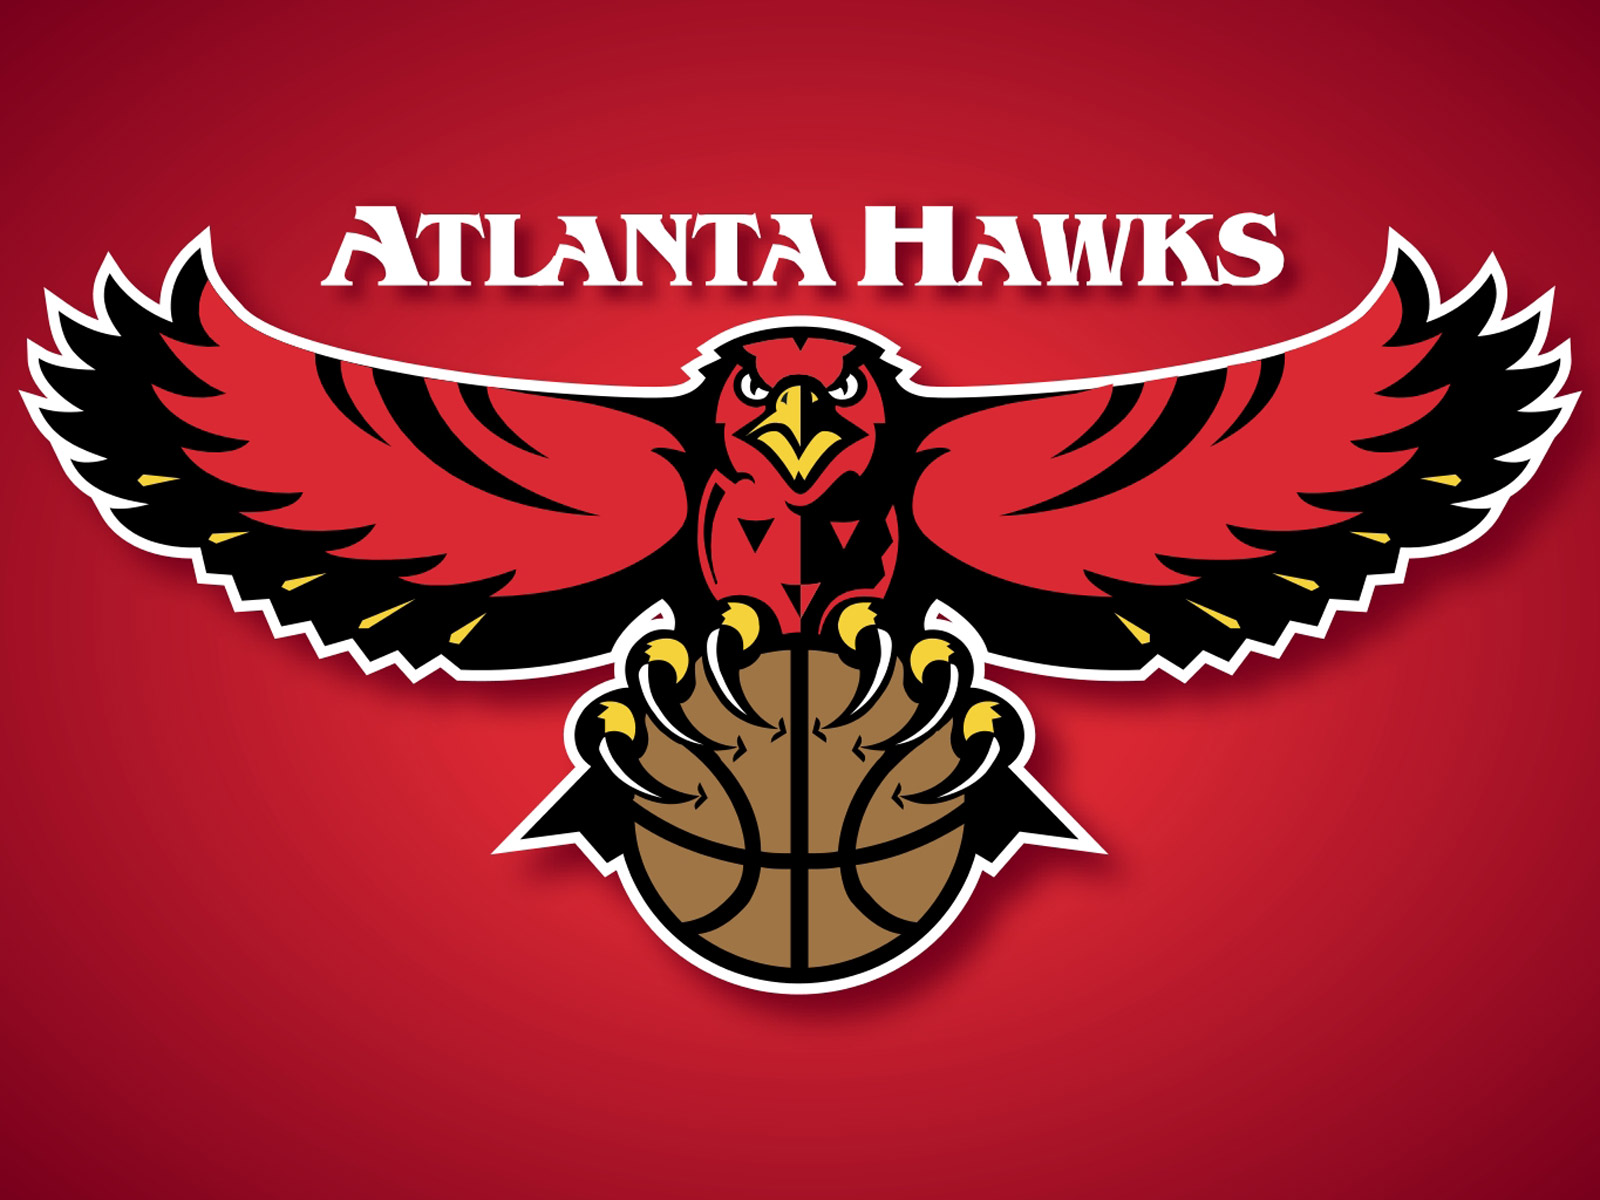 The Atlanta Hawks S Basketball Team